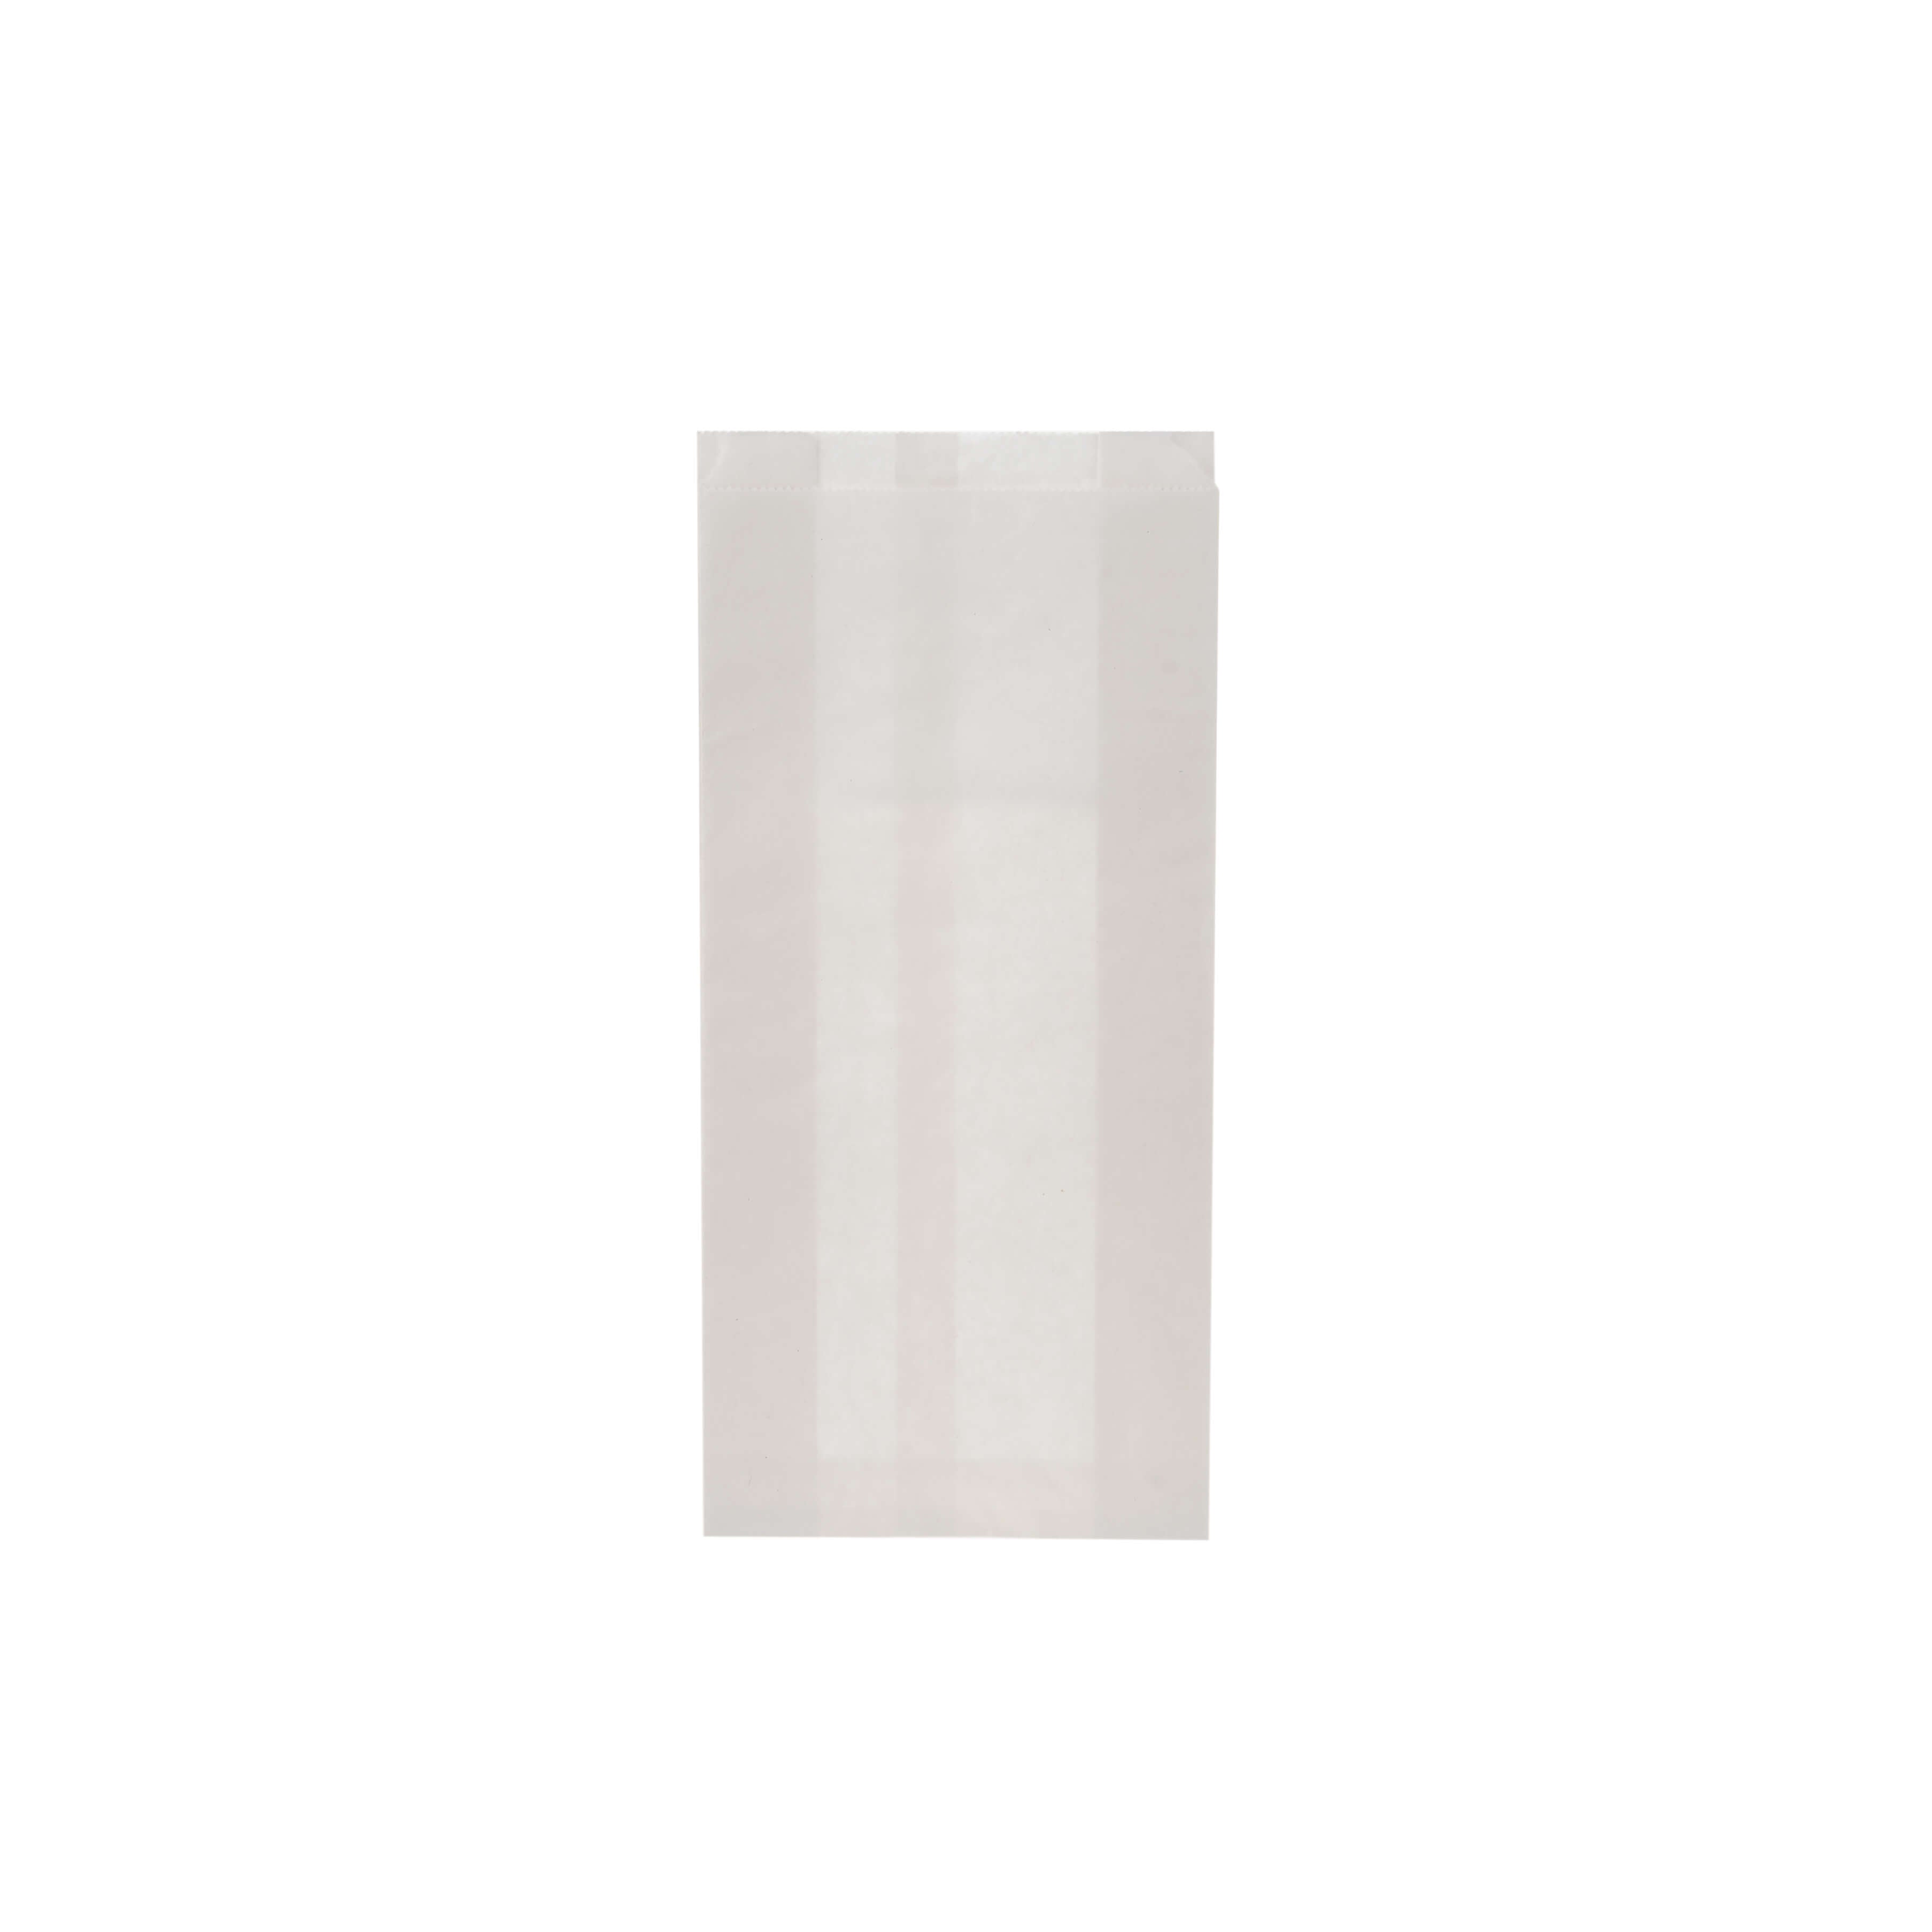 140x75x330 mm No.2 Pinch or flat bottom paper bag white - Hotpack Global